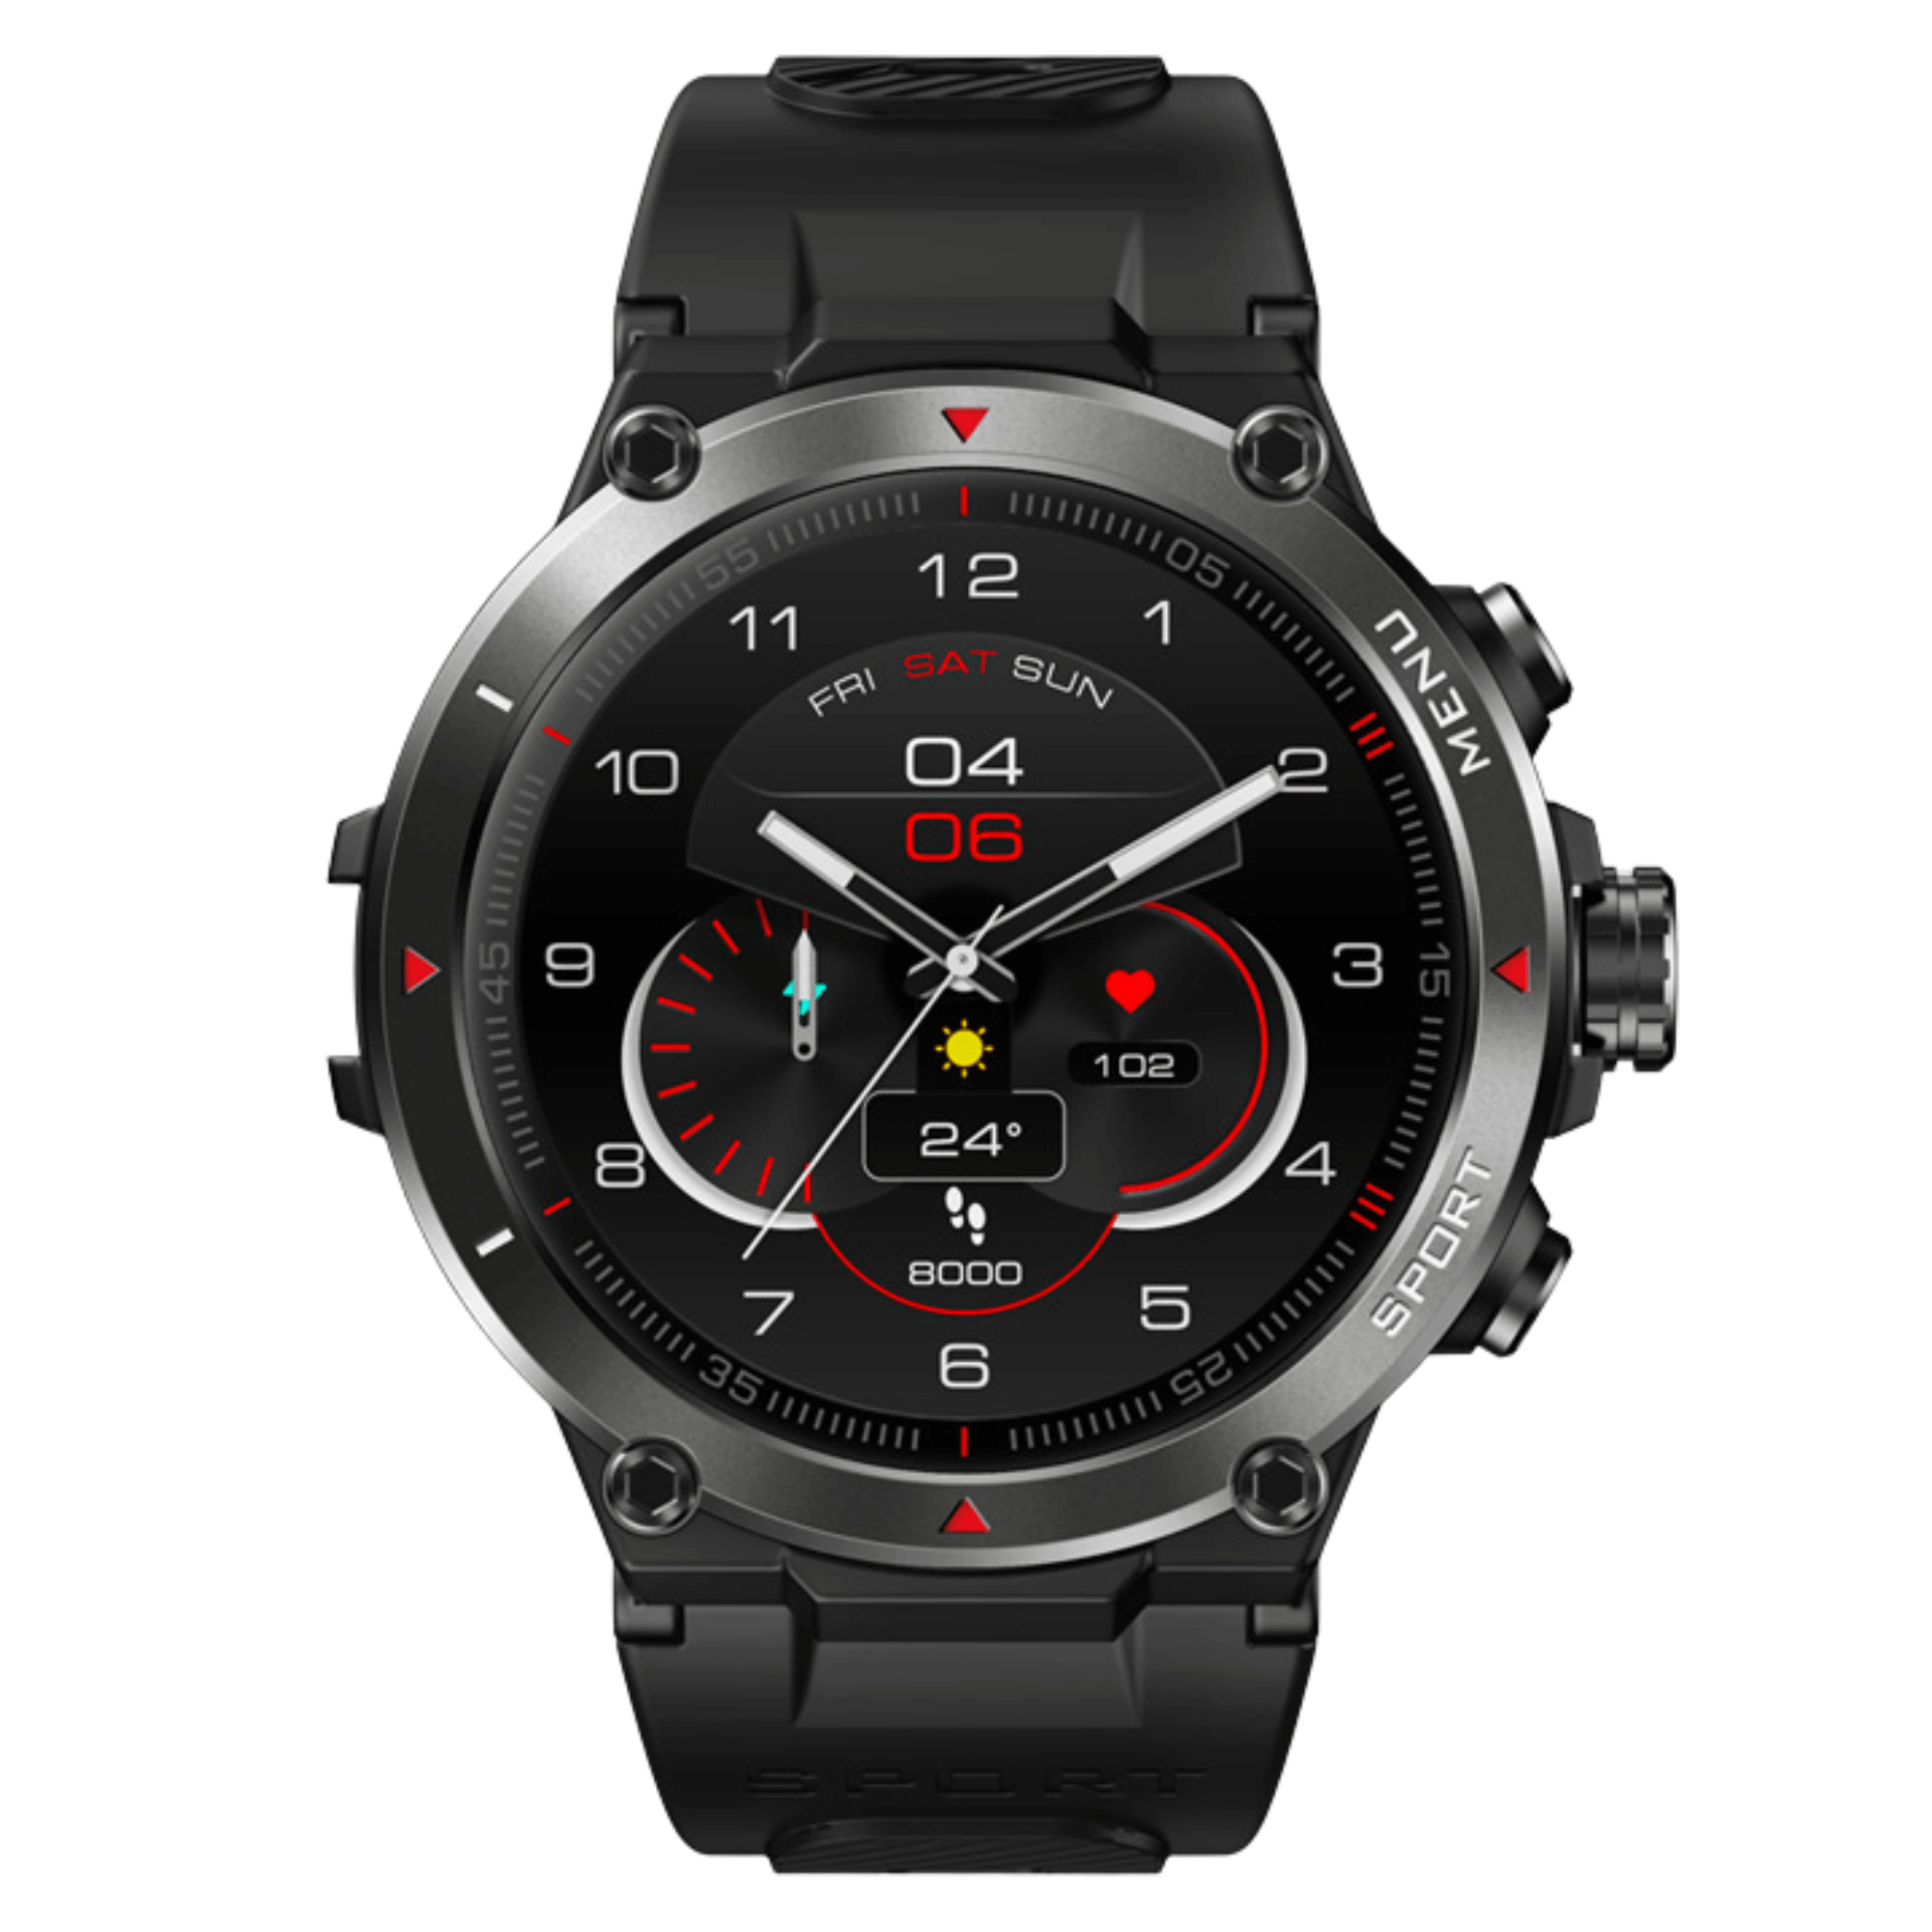 Smartwatch ZEBLAZE Stratos 2 - Relógio Inteligente Esportivo - relogiosbenyar - aço inoxidável, promo, zeblaze - relogiosbenyar.com.br